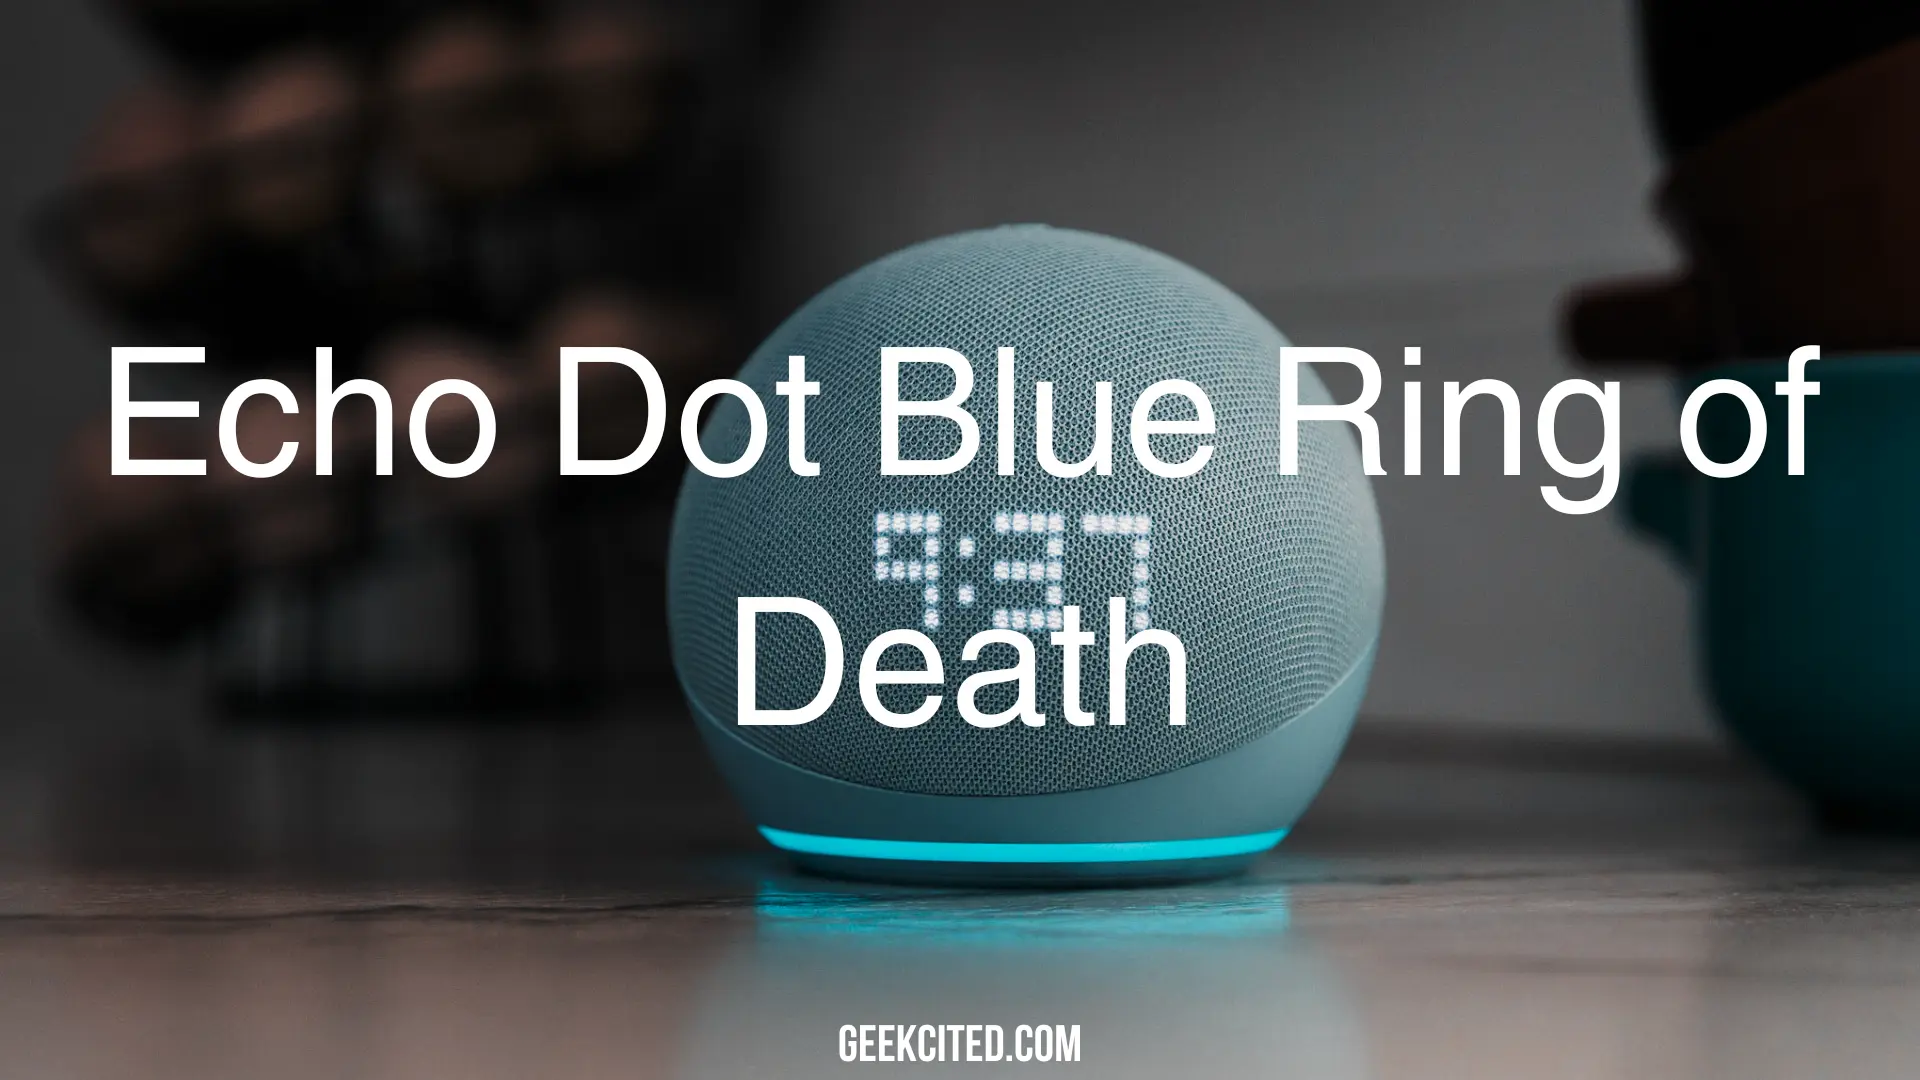 Echo Dot Blue Ring of Death